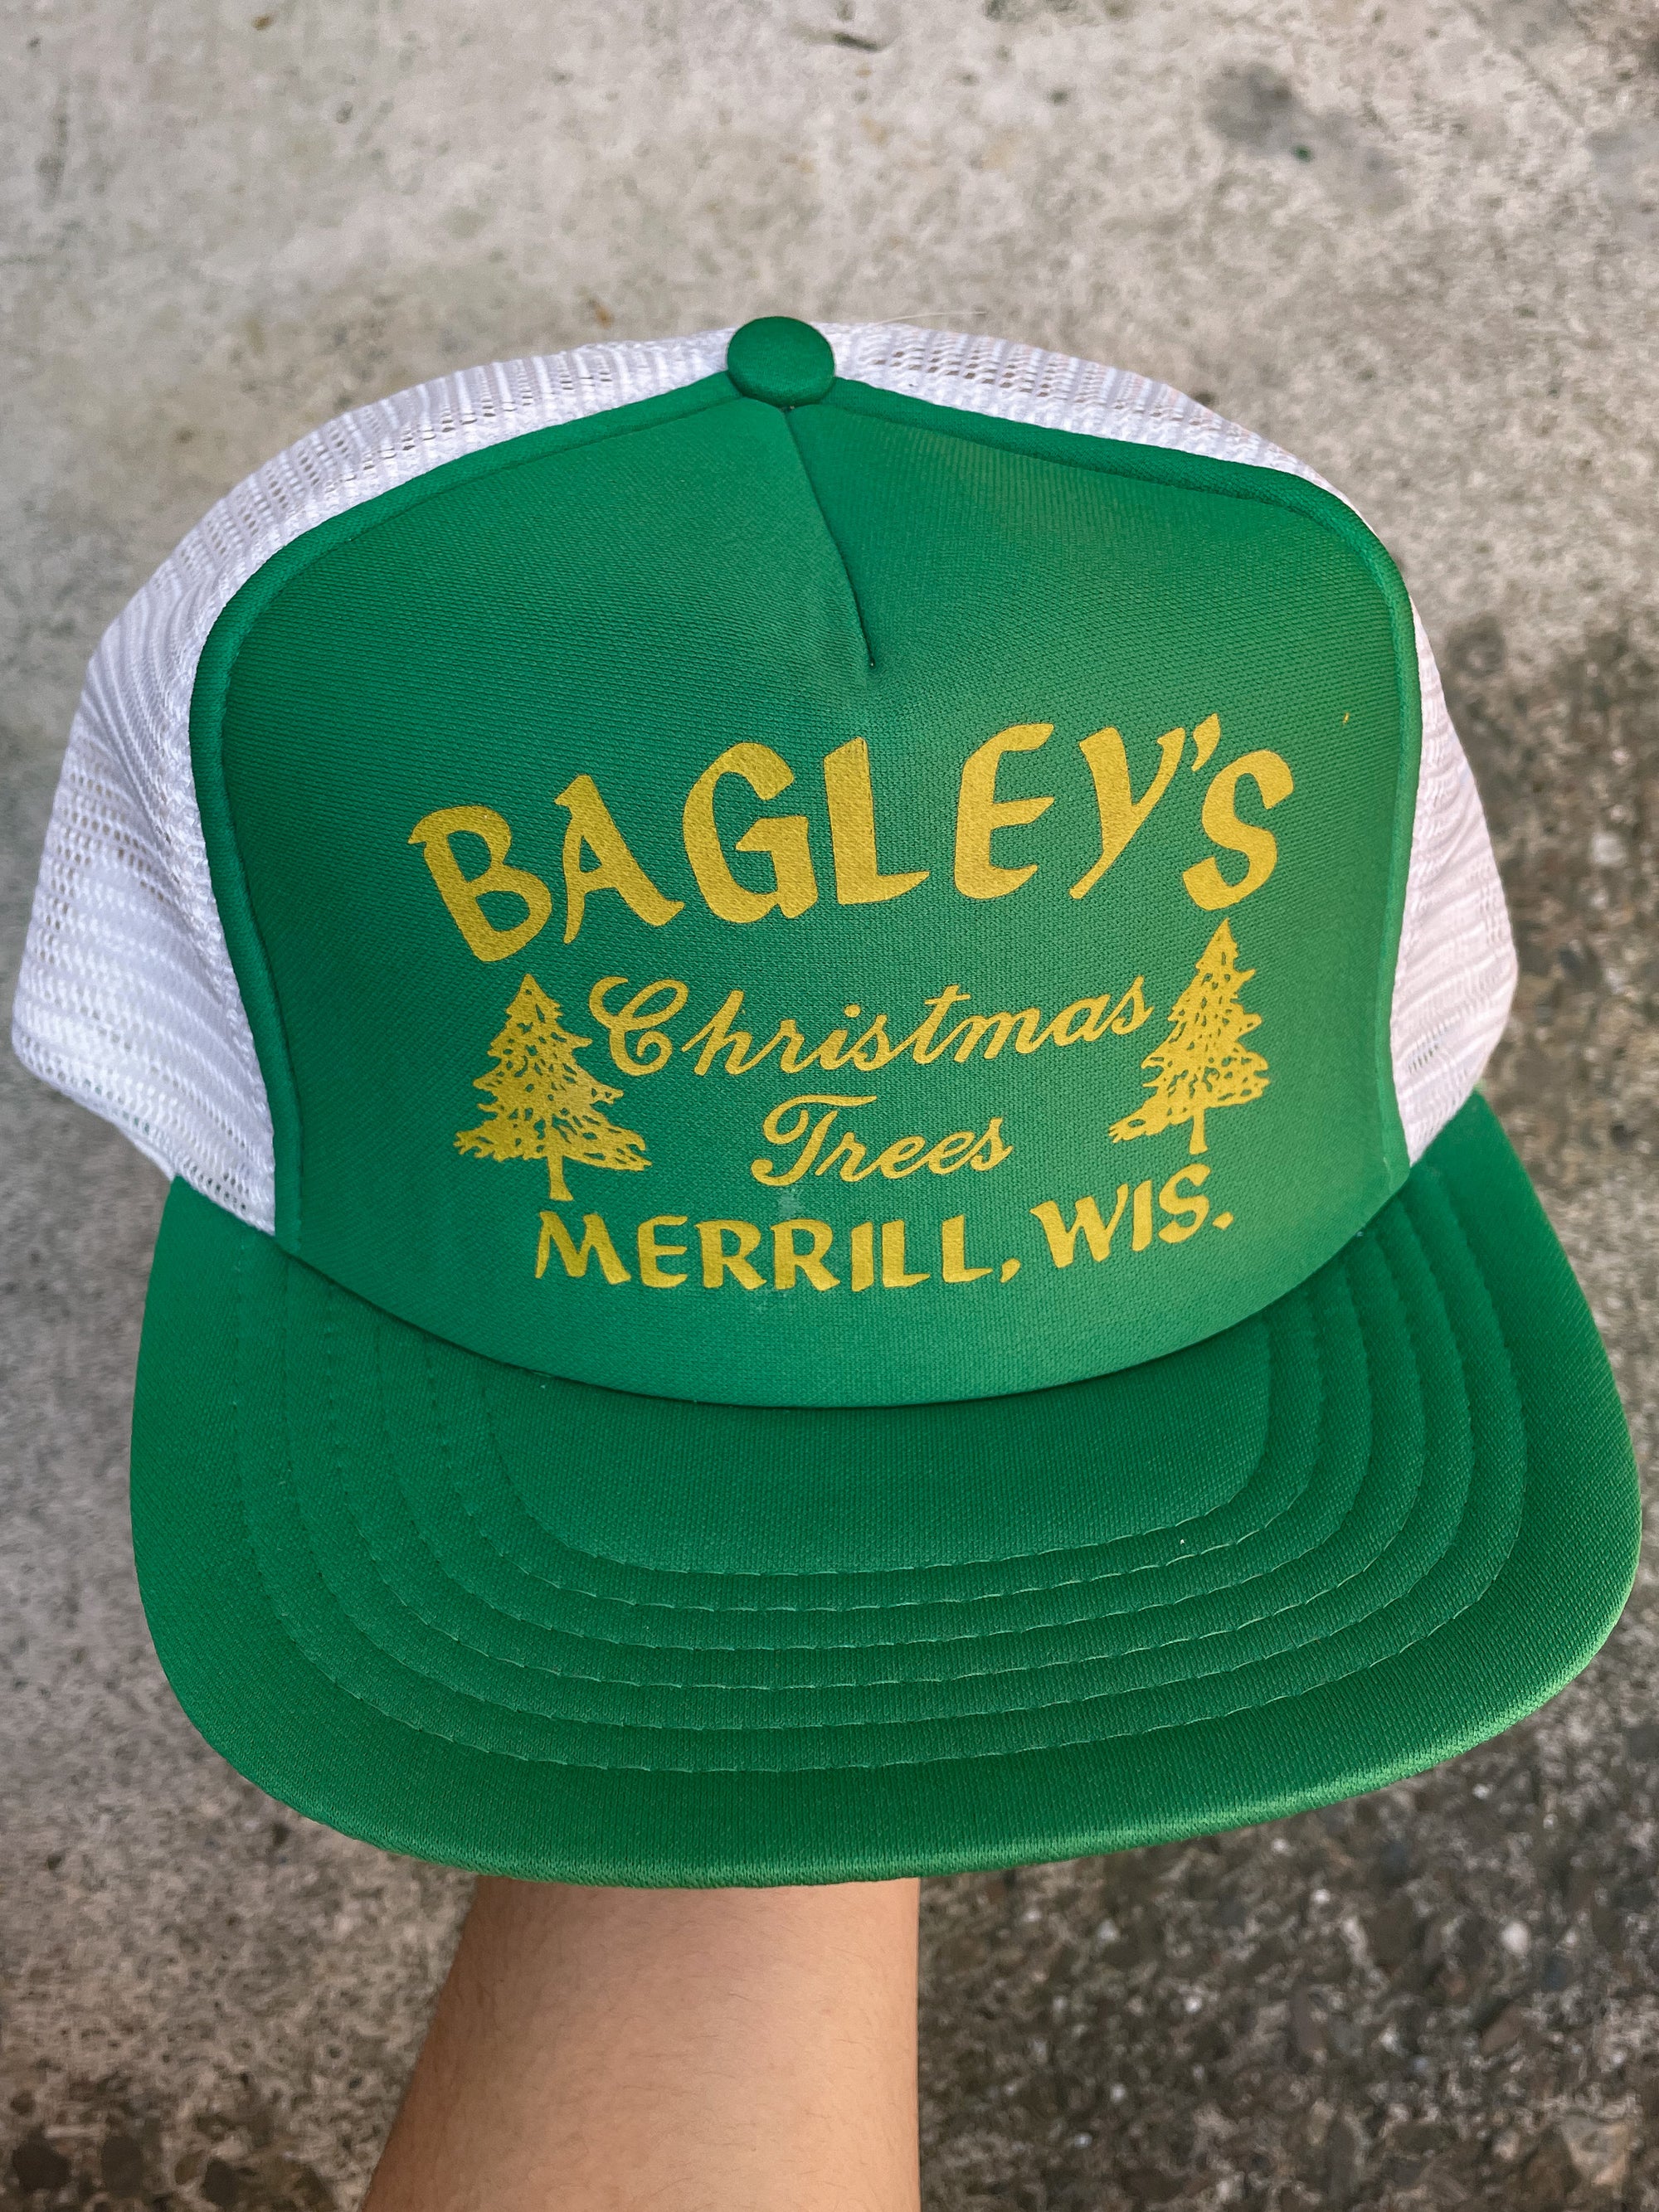 1990s “Bagley’s Christmas Trees” Trucker Hat